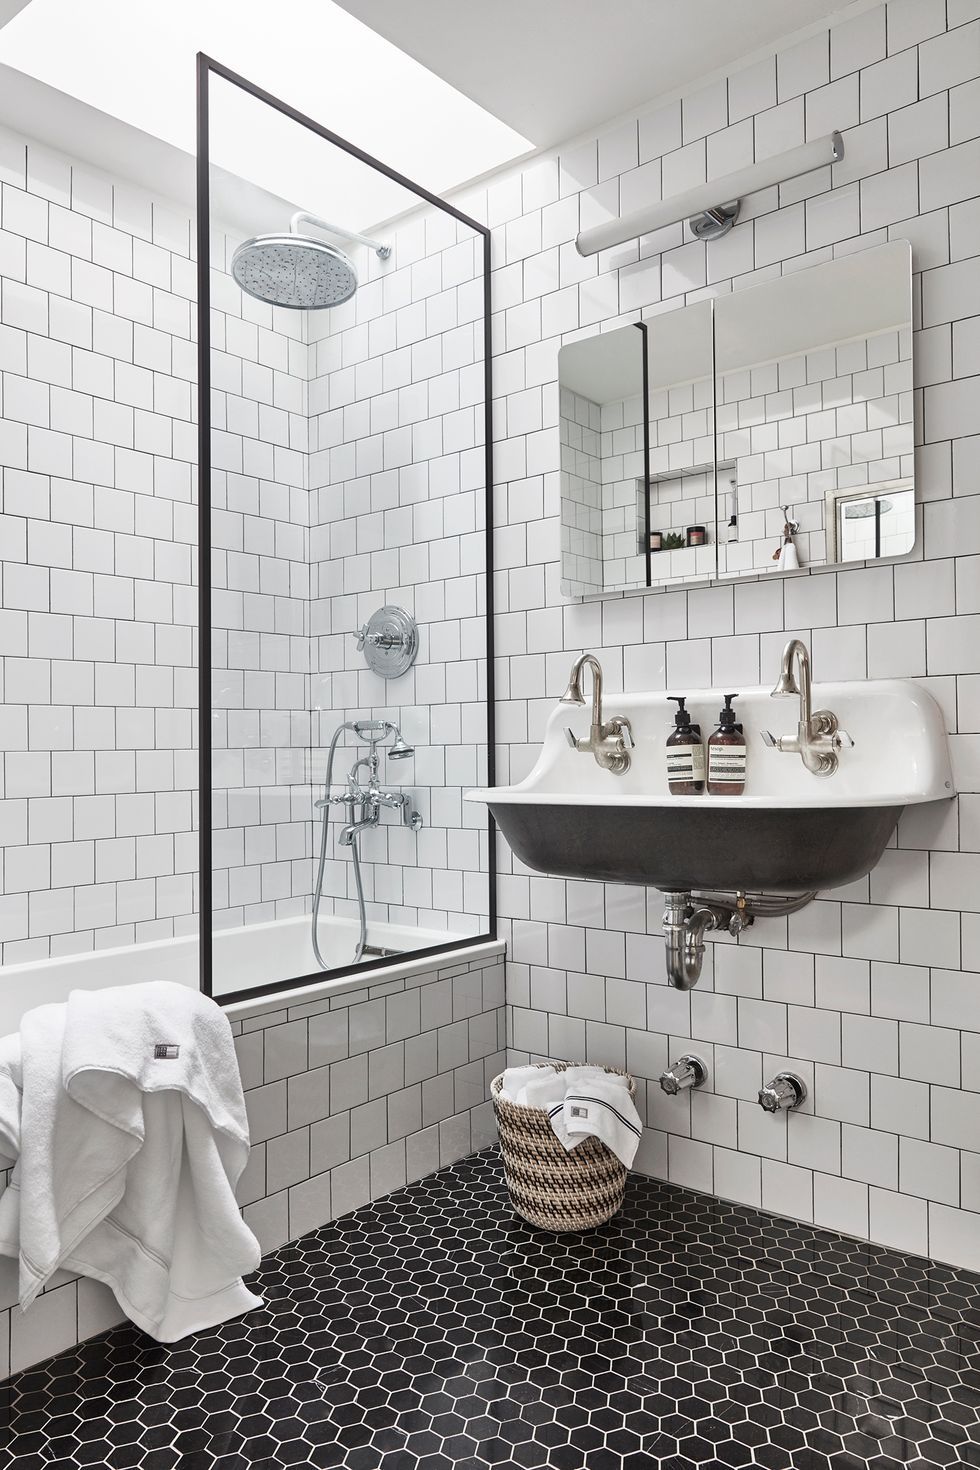 creative bathroom tile design ideas - tiles for floor, showers and